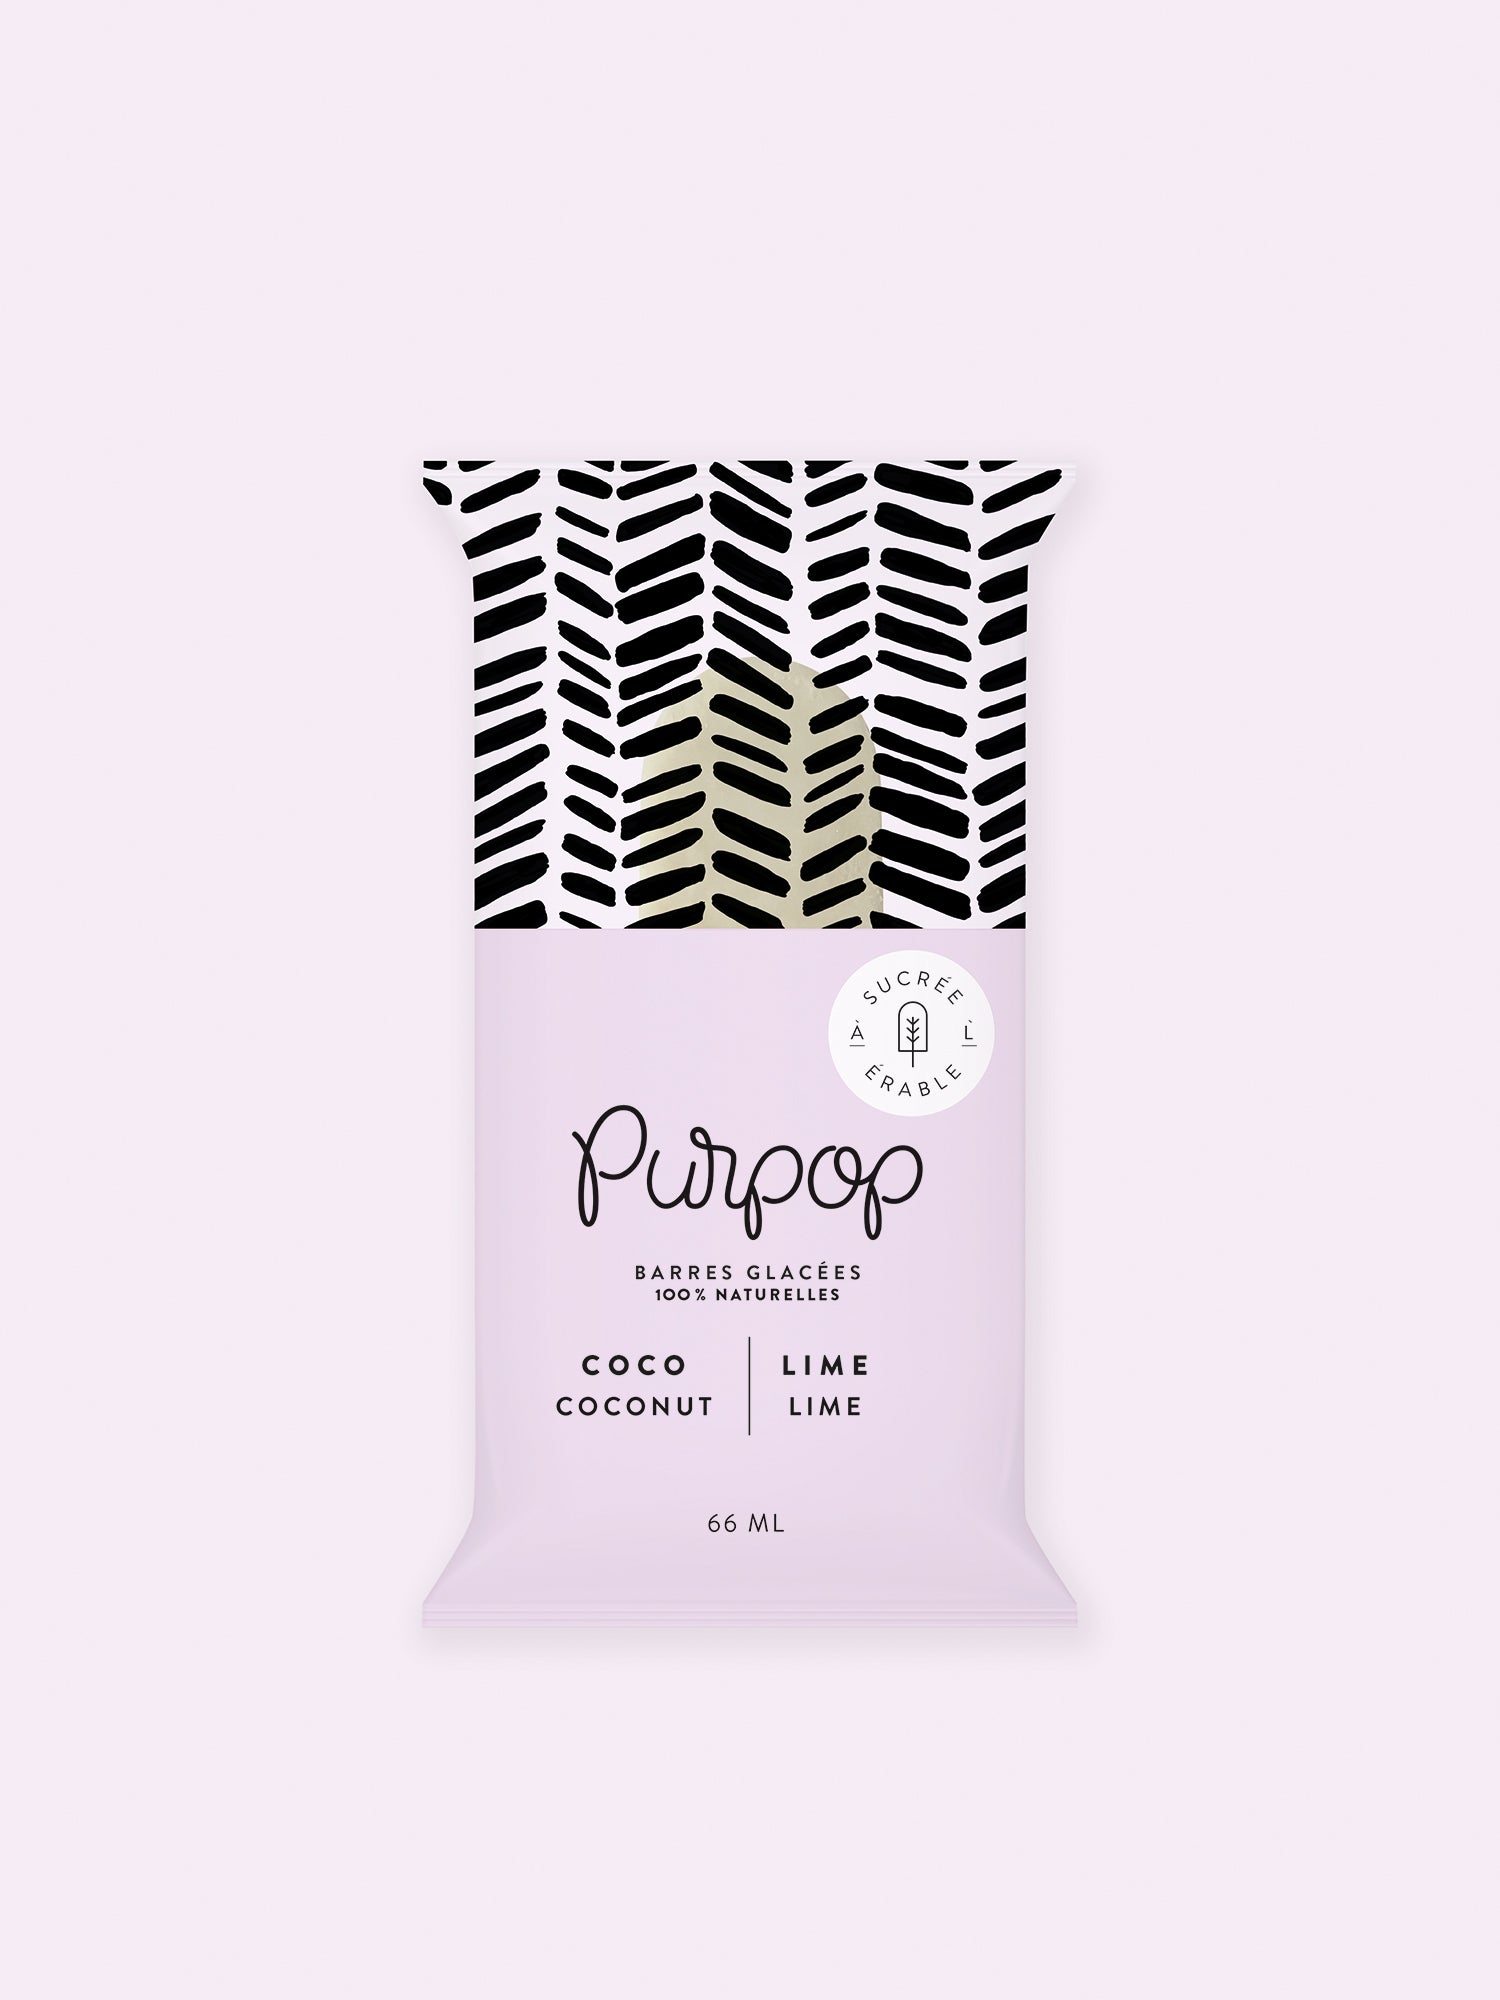 Coco lime - Purpop